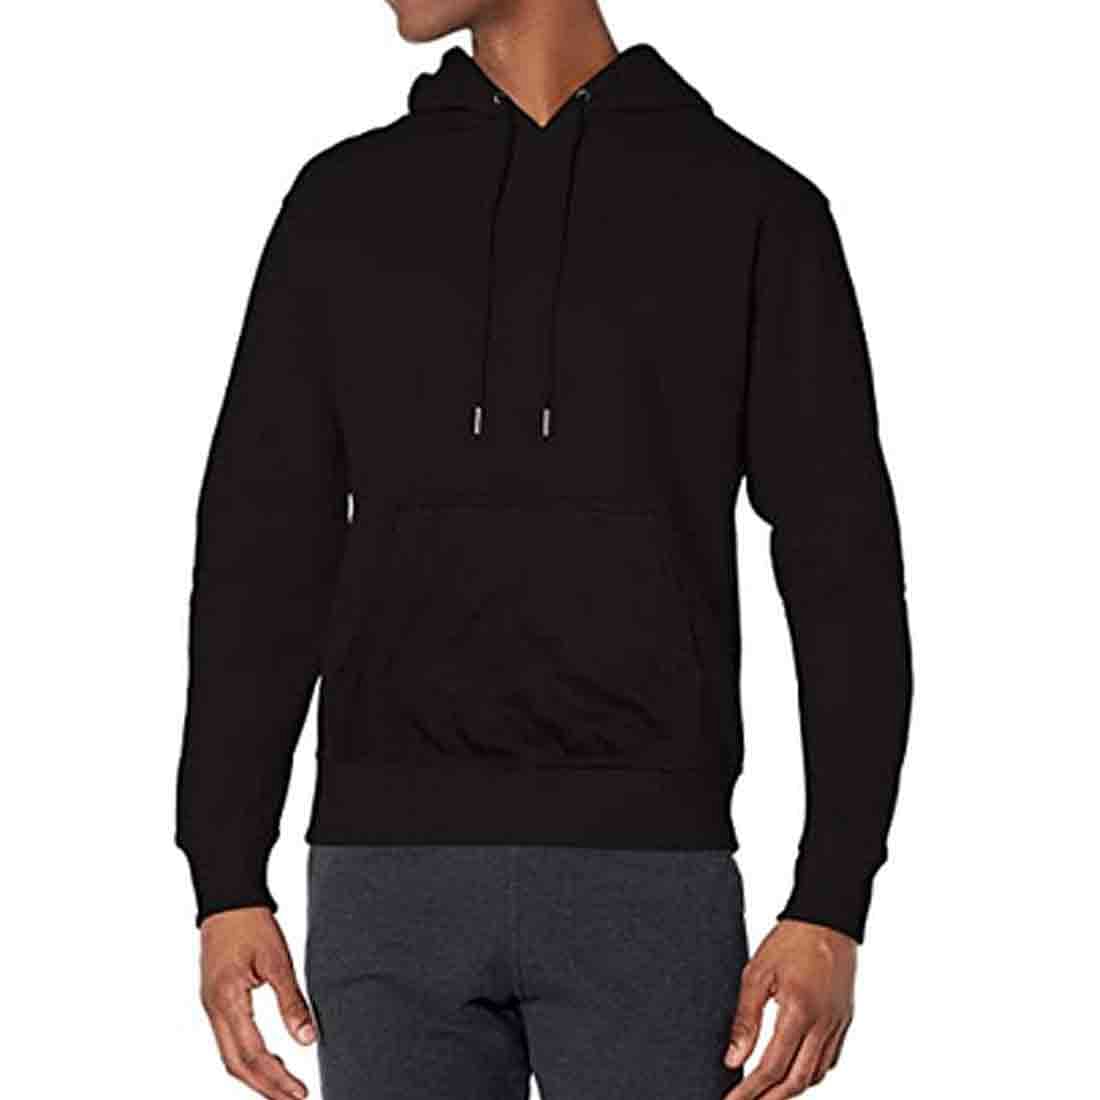 Nutcase stylish hoodie sweatshirt Unisex - Chill Man Nutcase